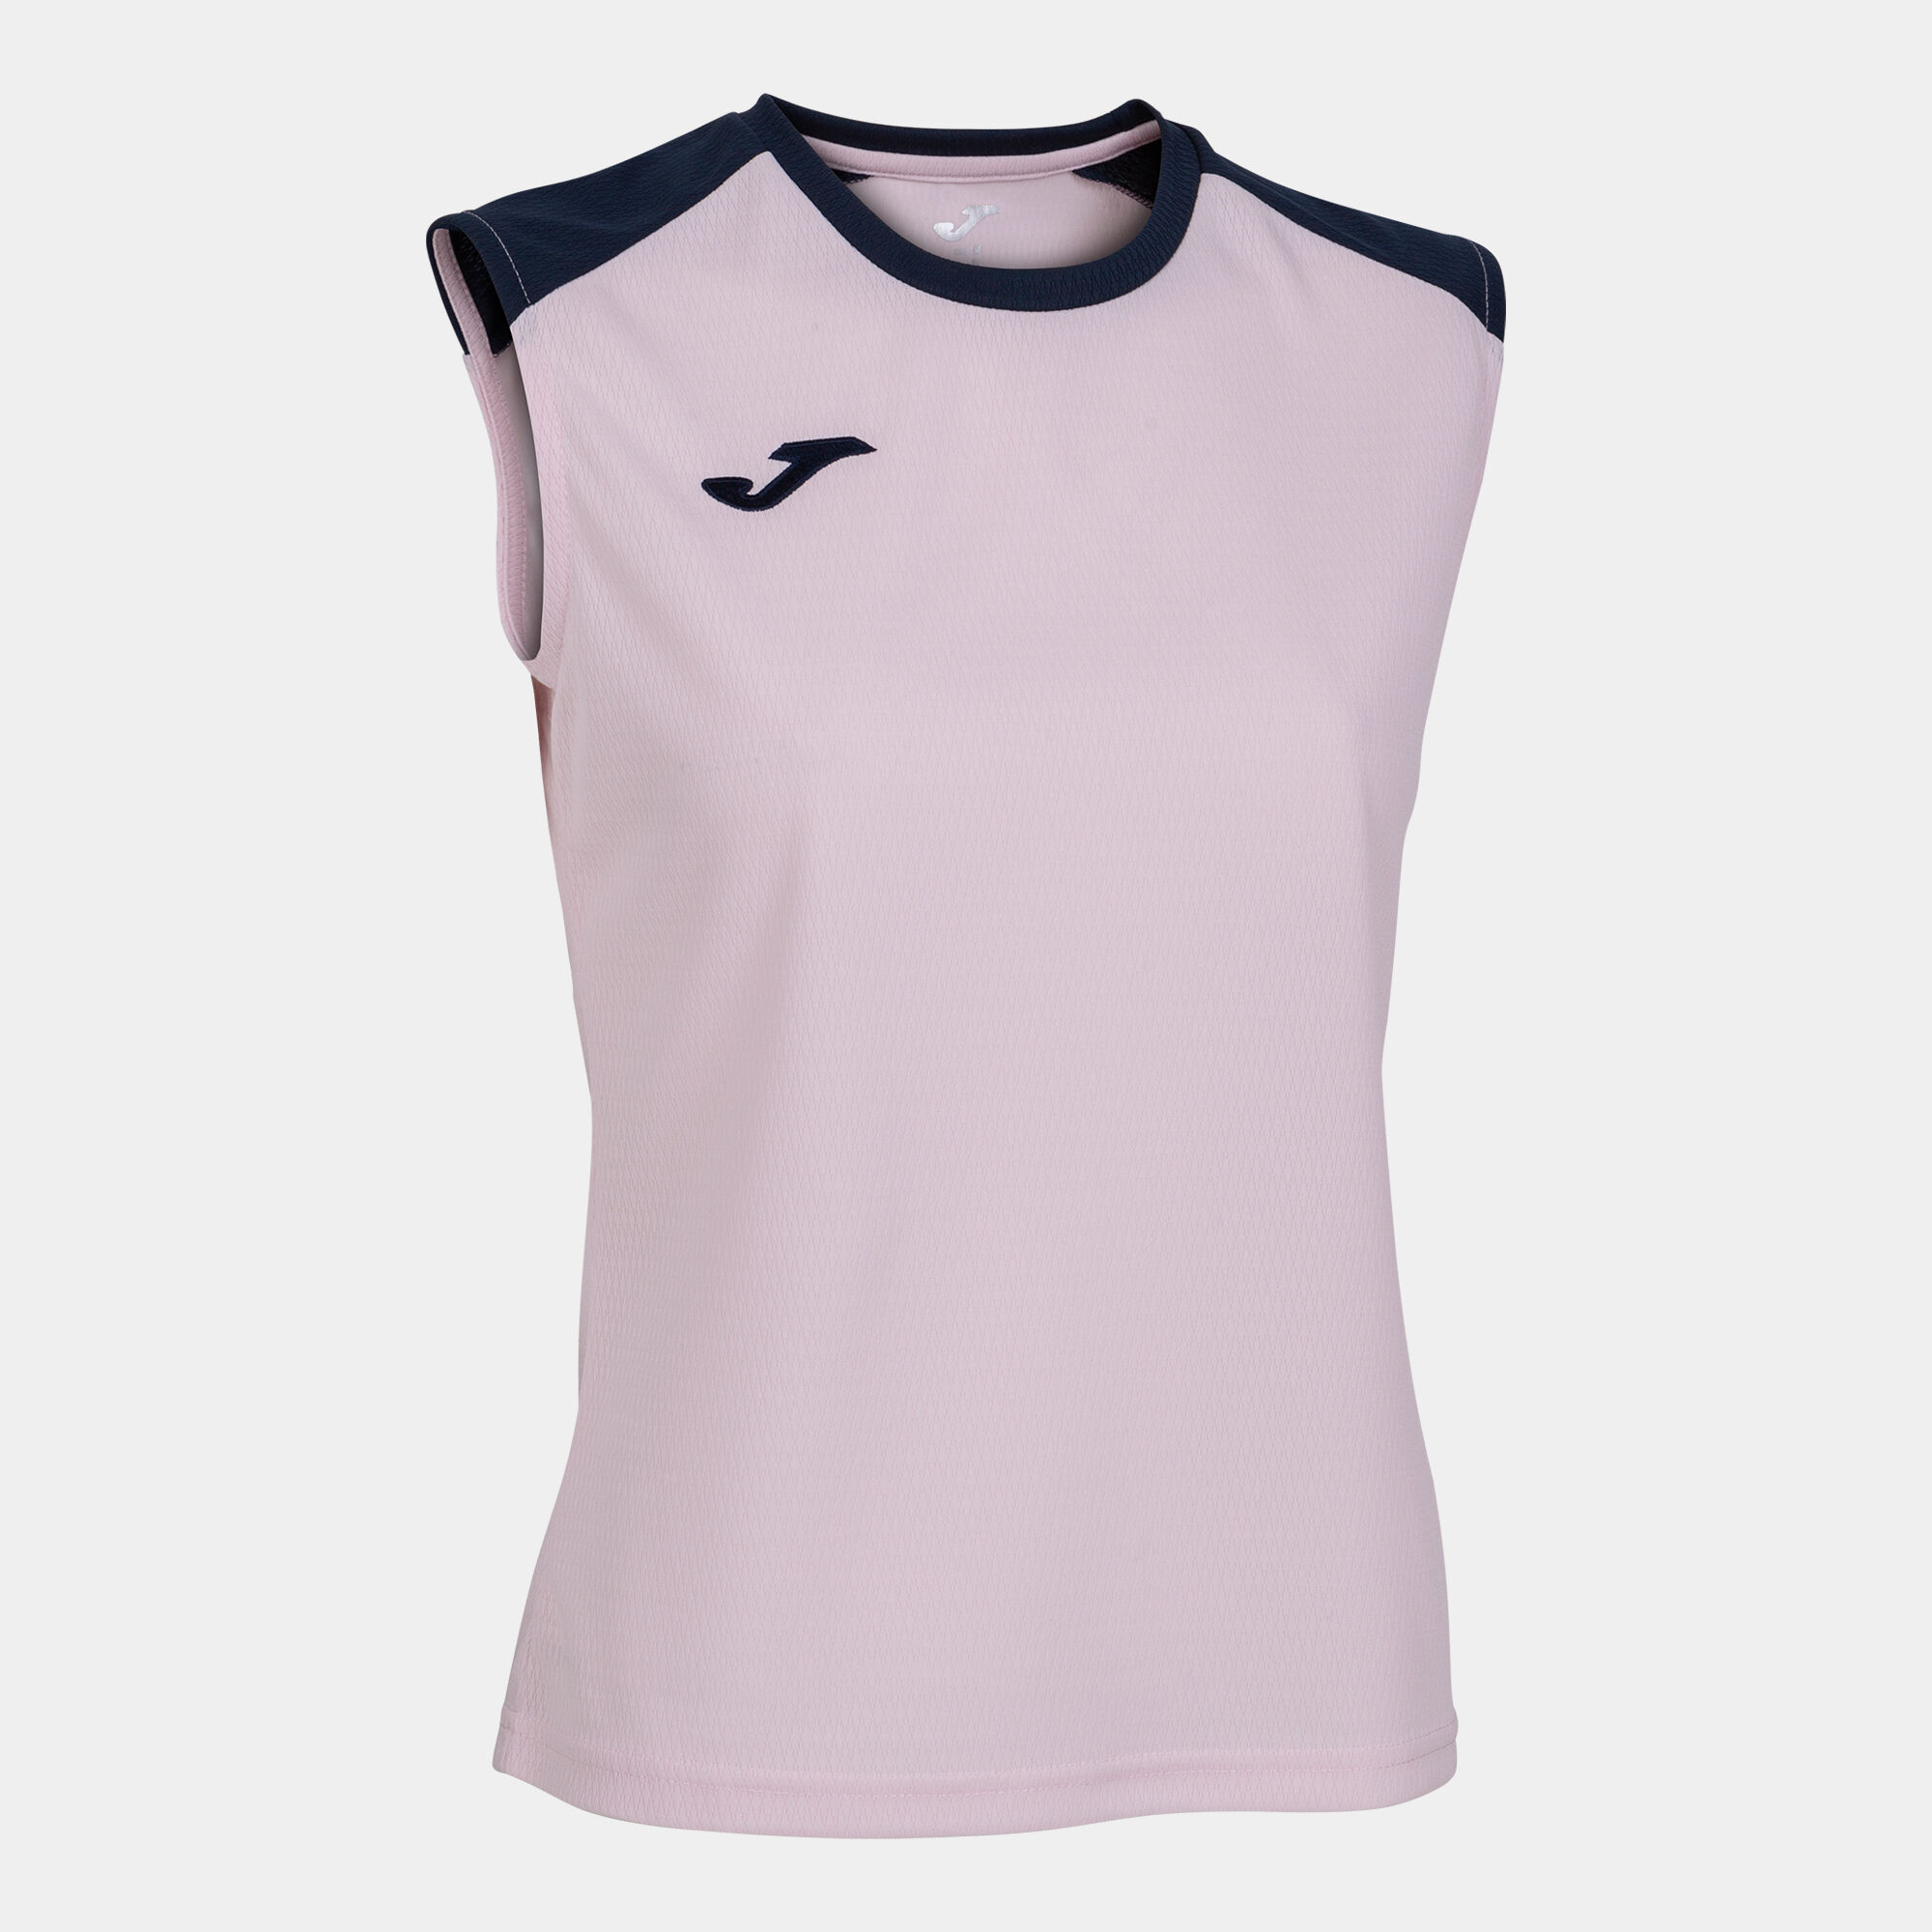 Camiseta tirantes mujer Eco Championship rosa marino